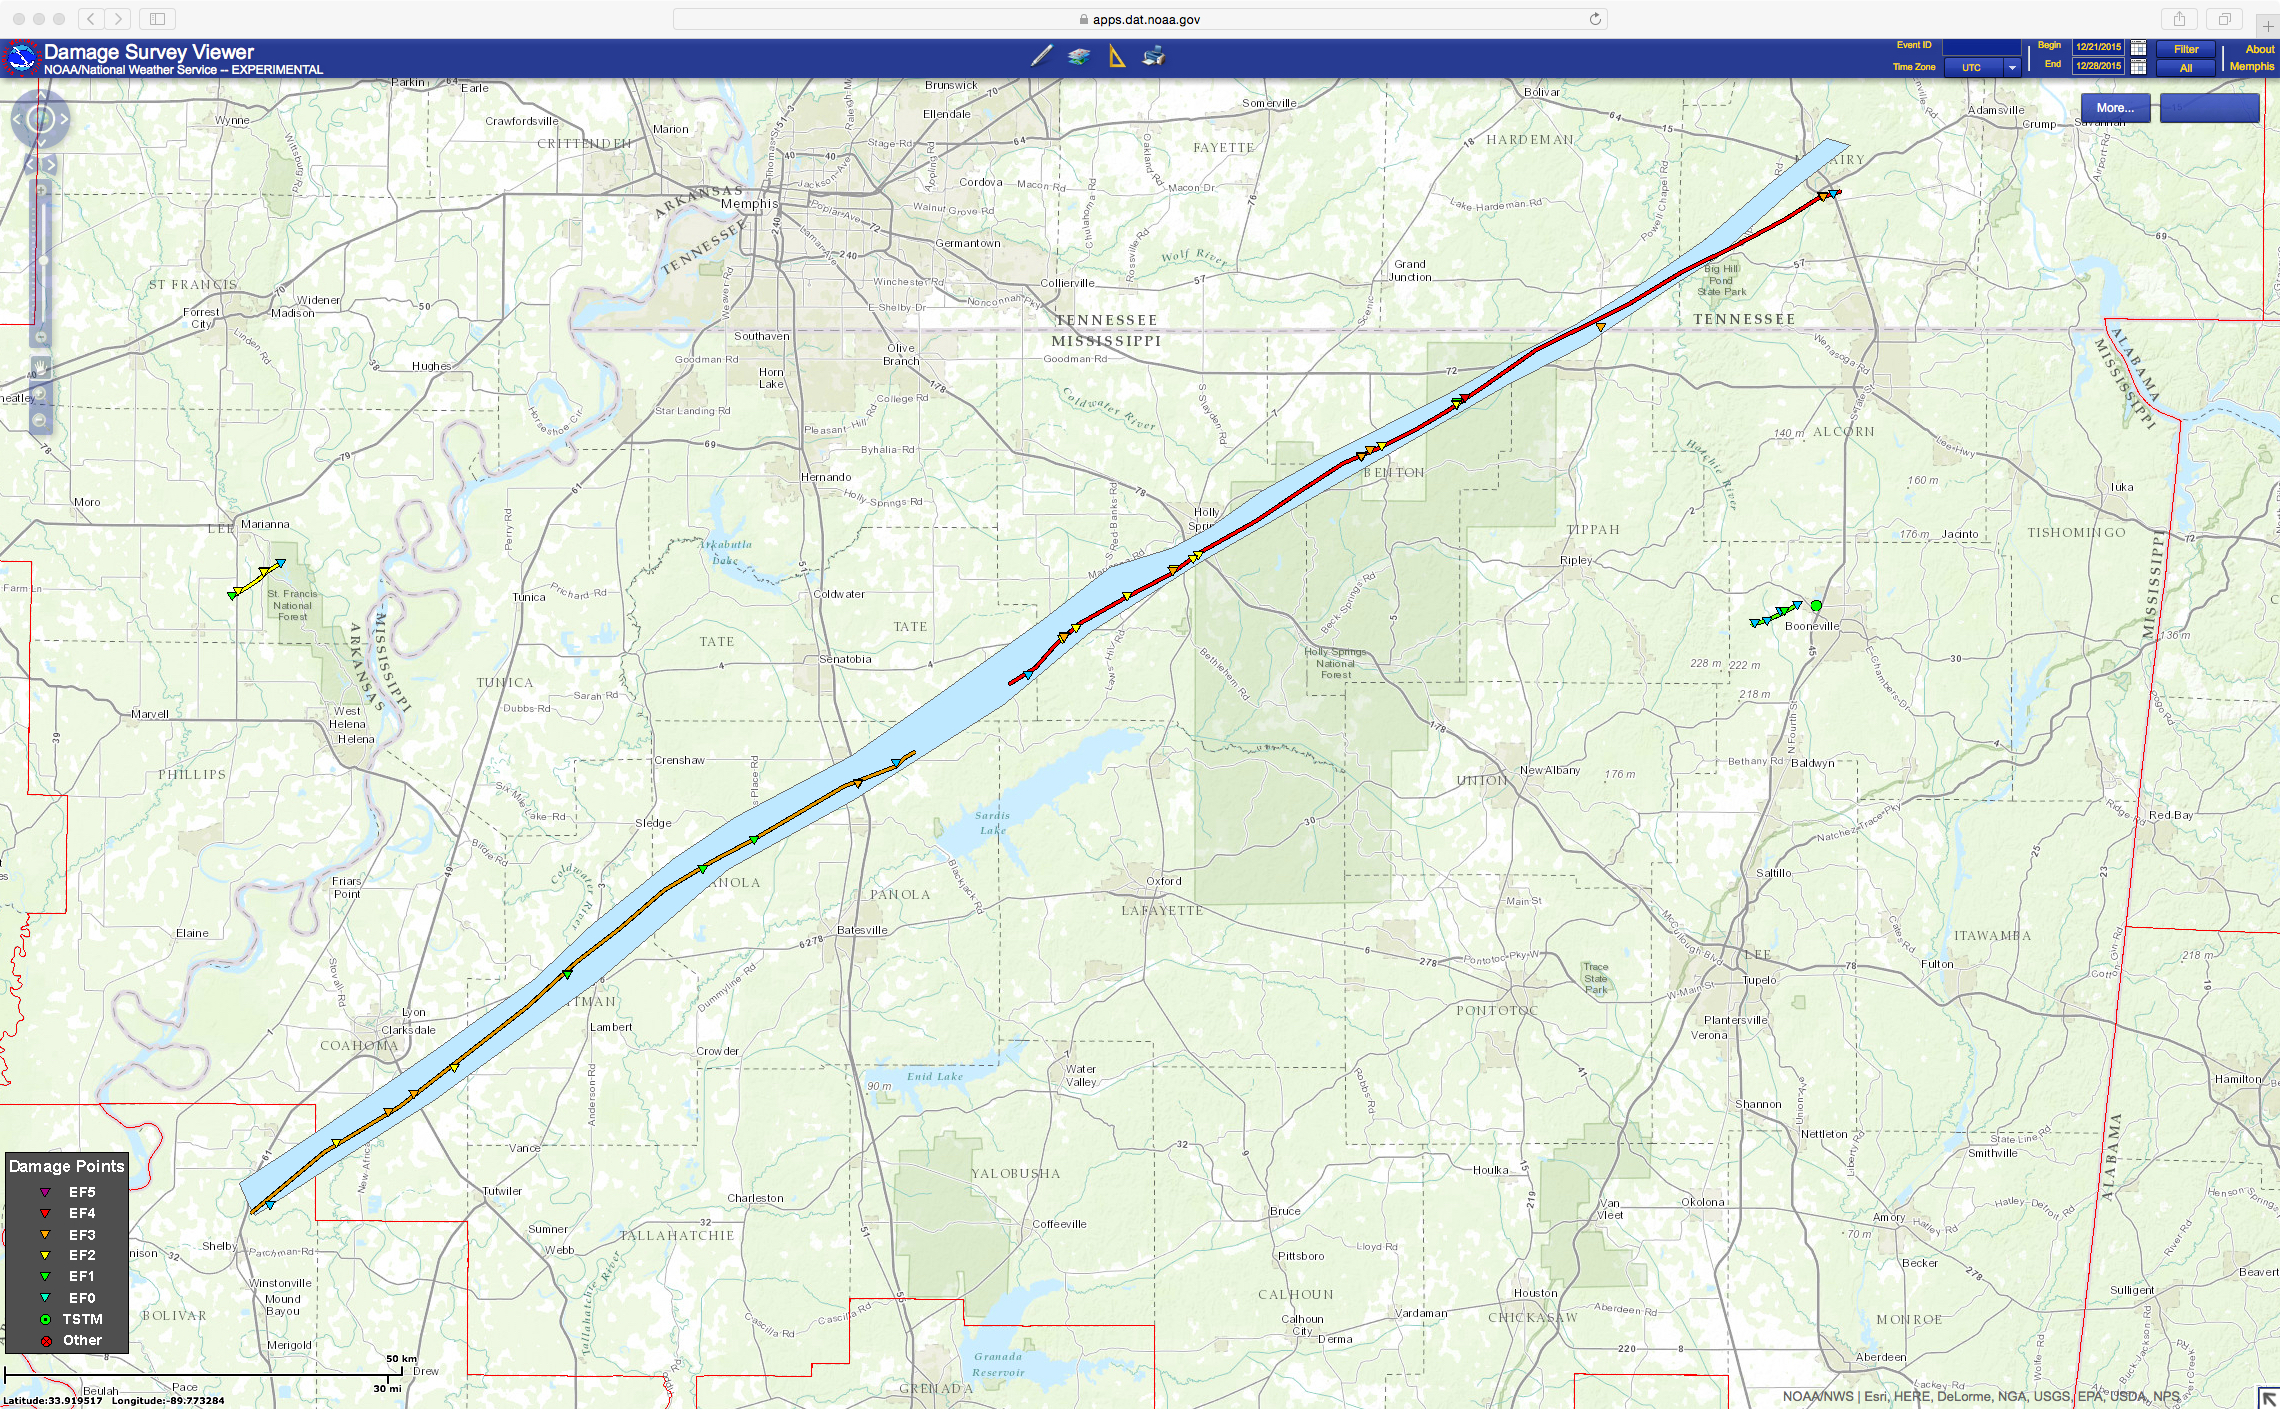 Preliminary tornado damage paths [click to enlarge]